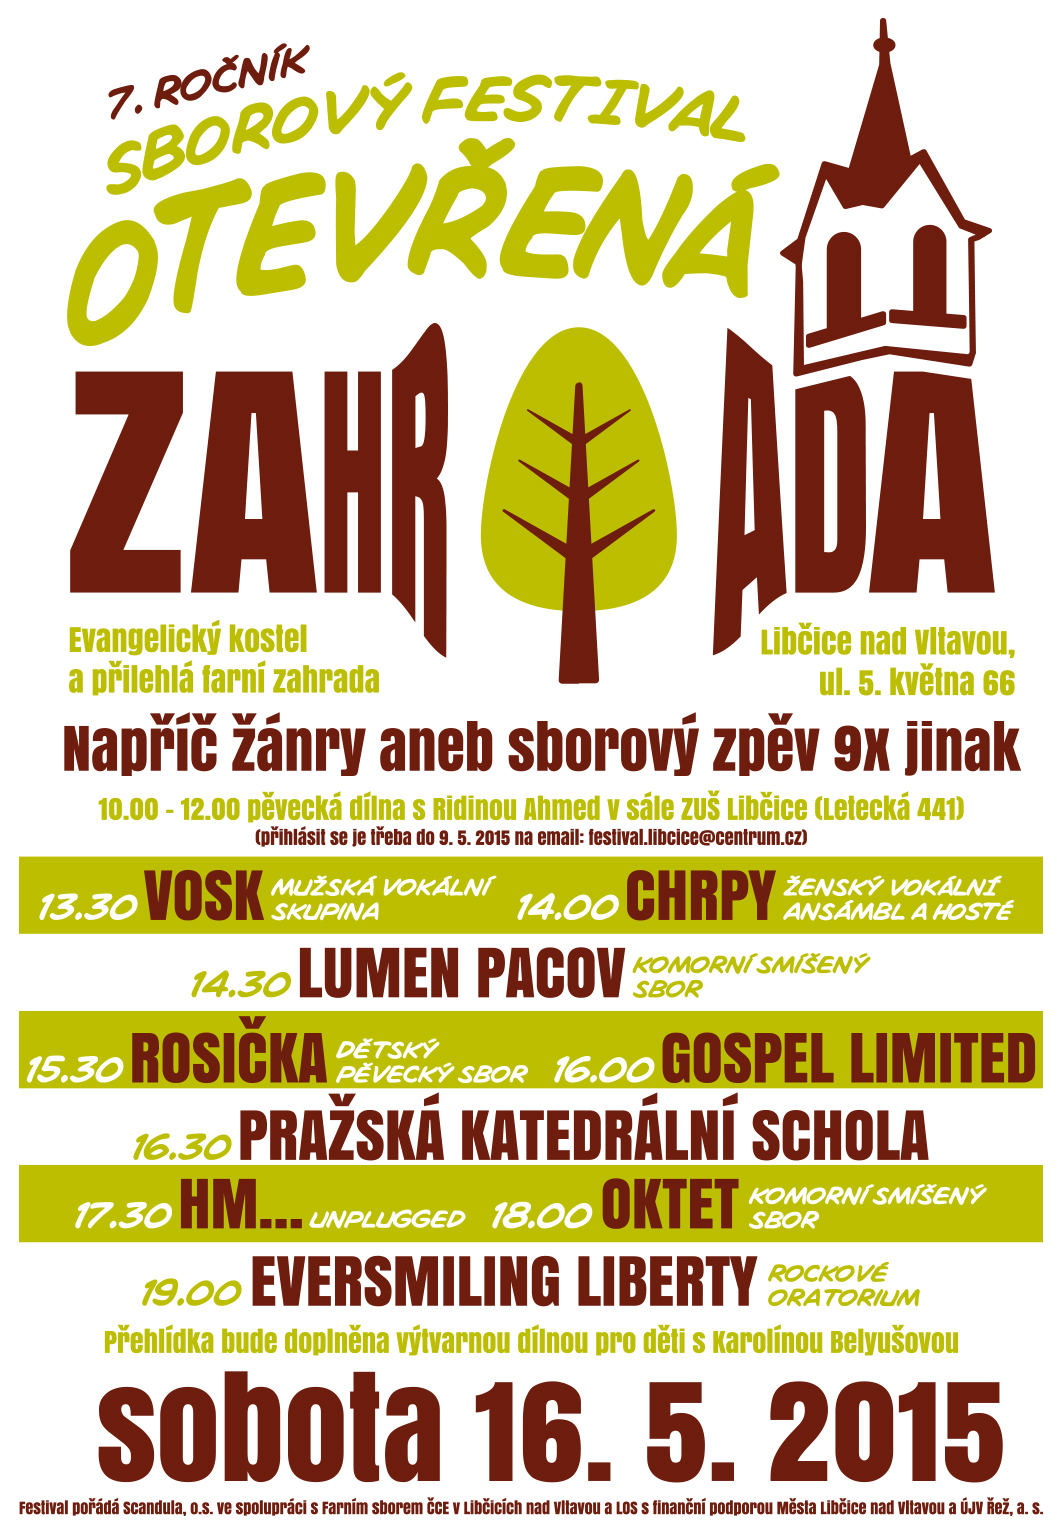 7. ročník festivalu sborového zpěvu "Otevřená zahrada" 2015